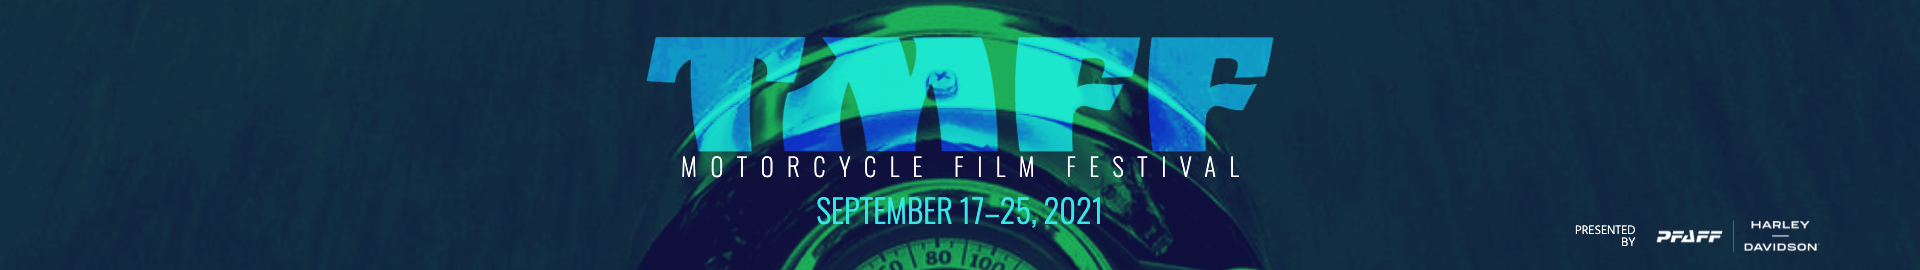 Toronto Motorcycle Film Festival